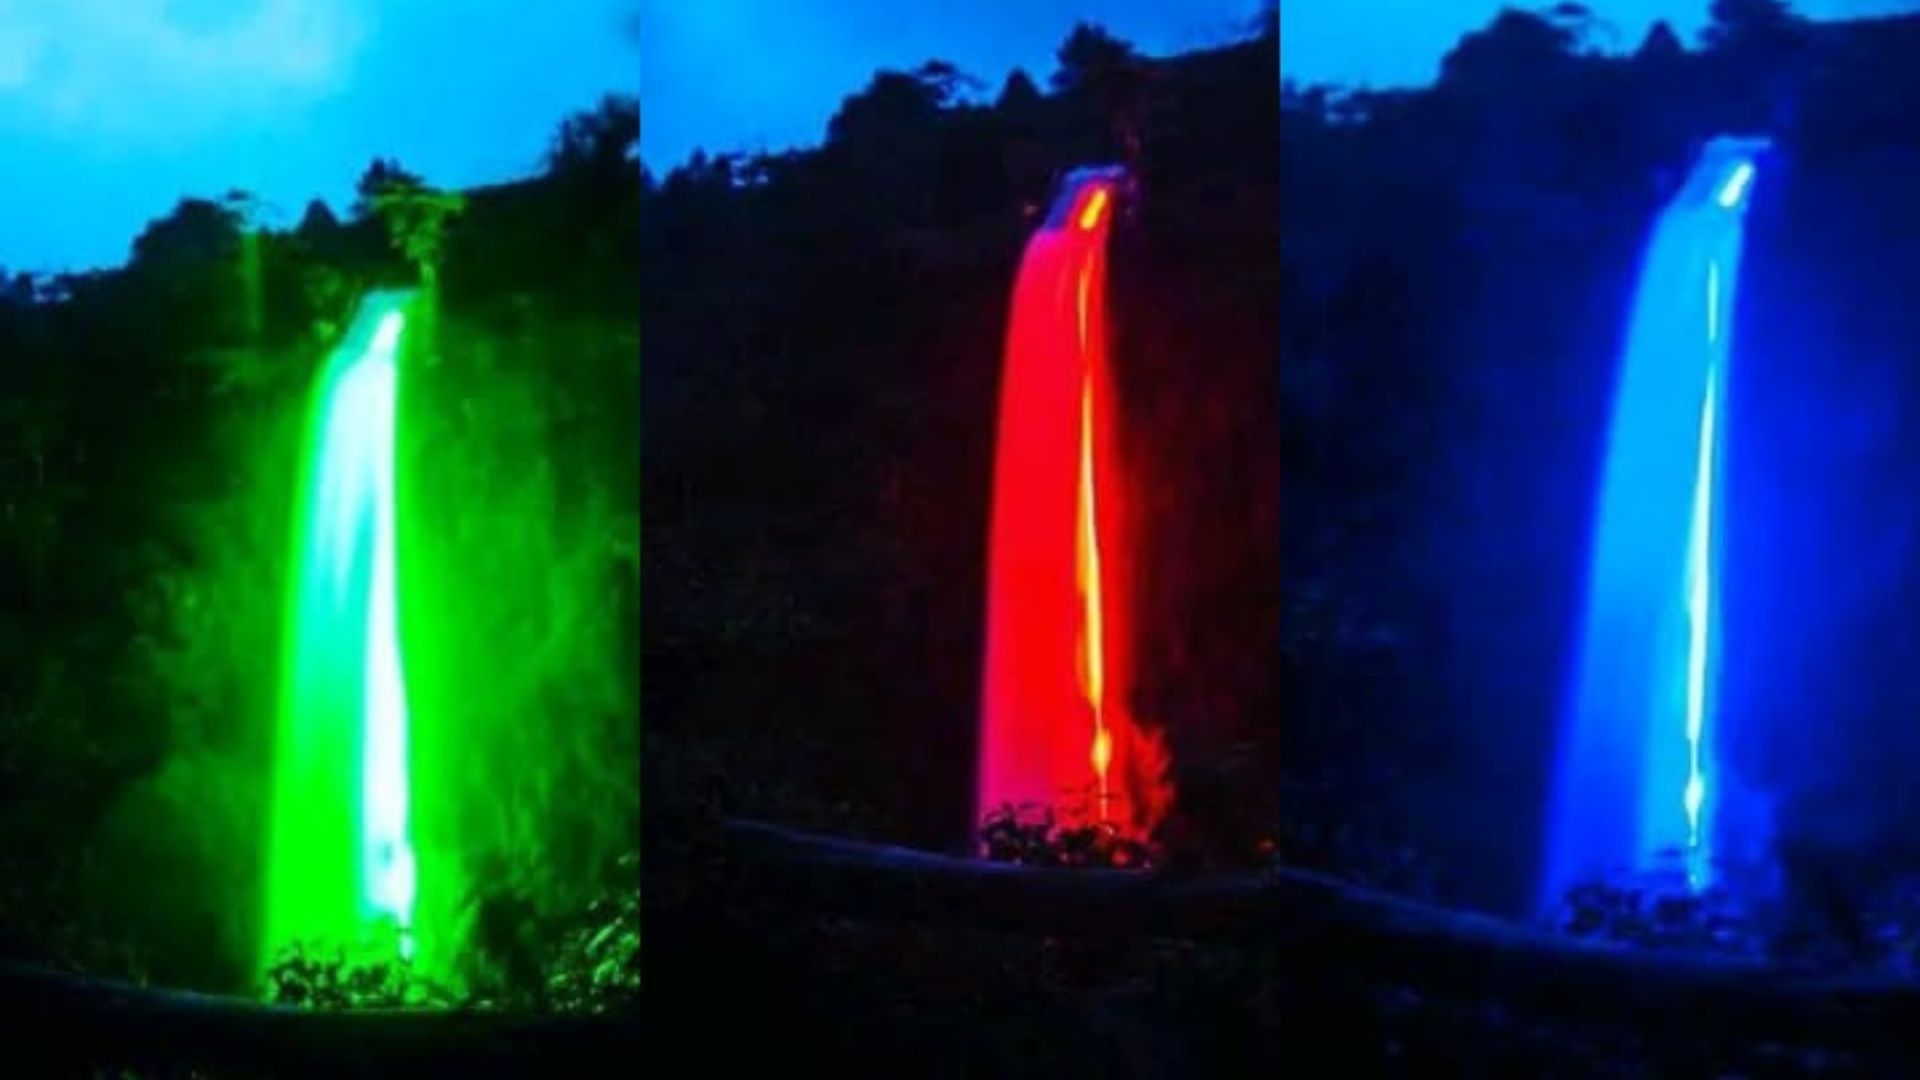 Tempat wisata alam tersembunyi di Tasikmalaya, air terjun Curug Agung Galunggung di malam hari memiliki tiga warna hijau, merah, dan biru.